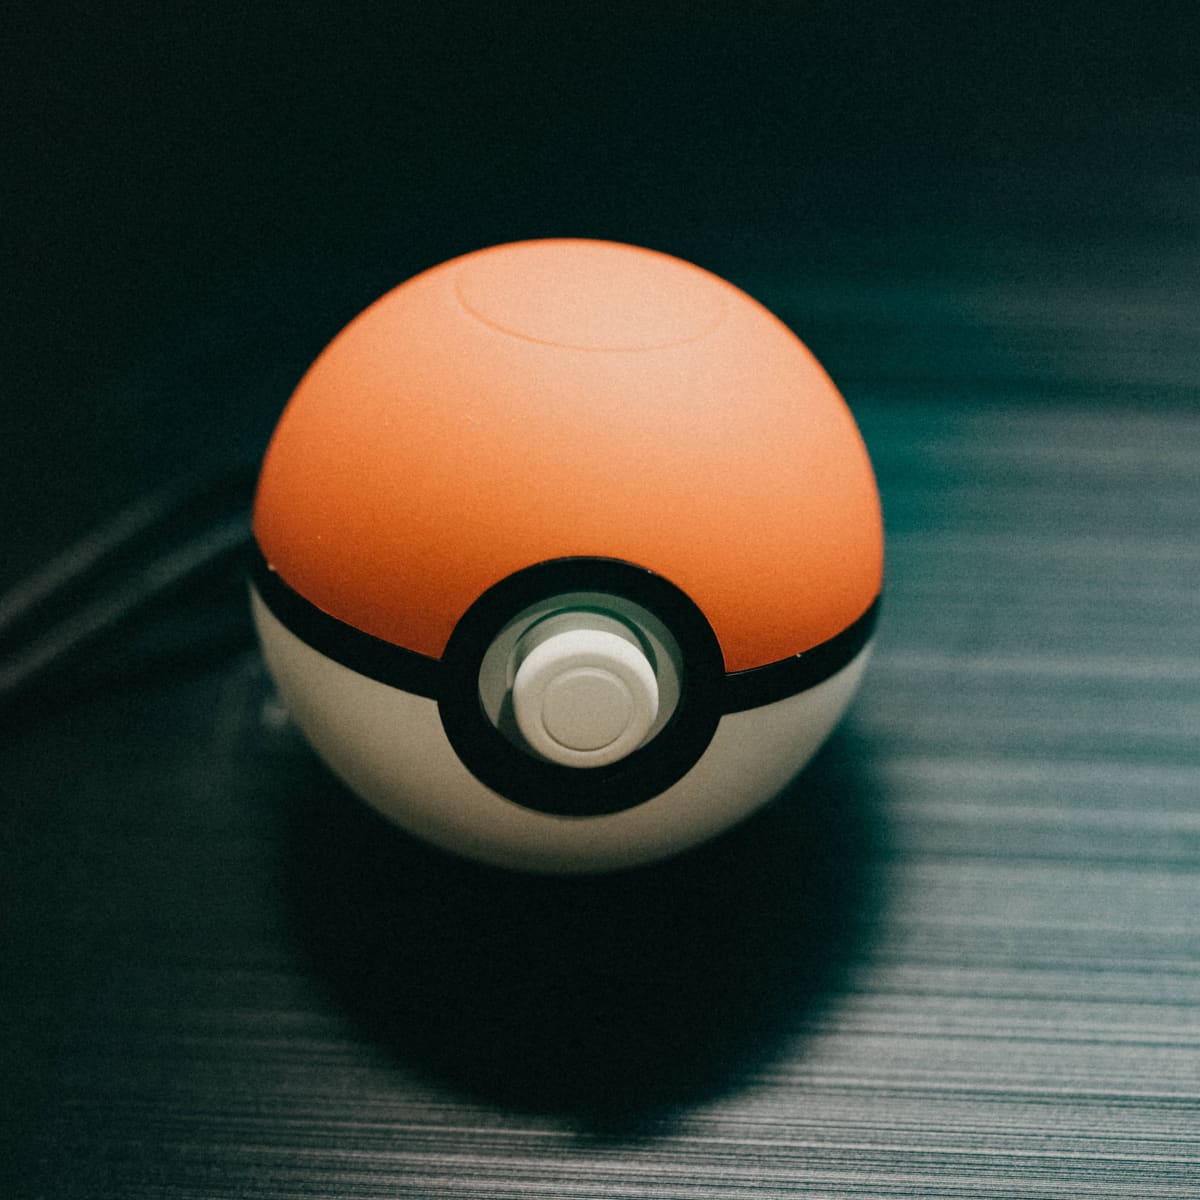 9 New Pokémon Type Ideas: Light, Cyber, and More - LevelSkip